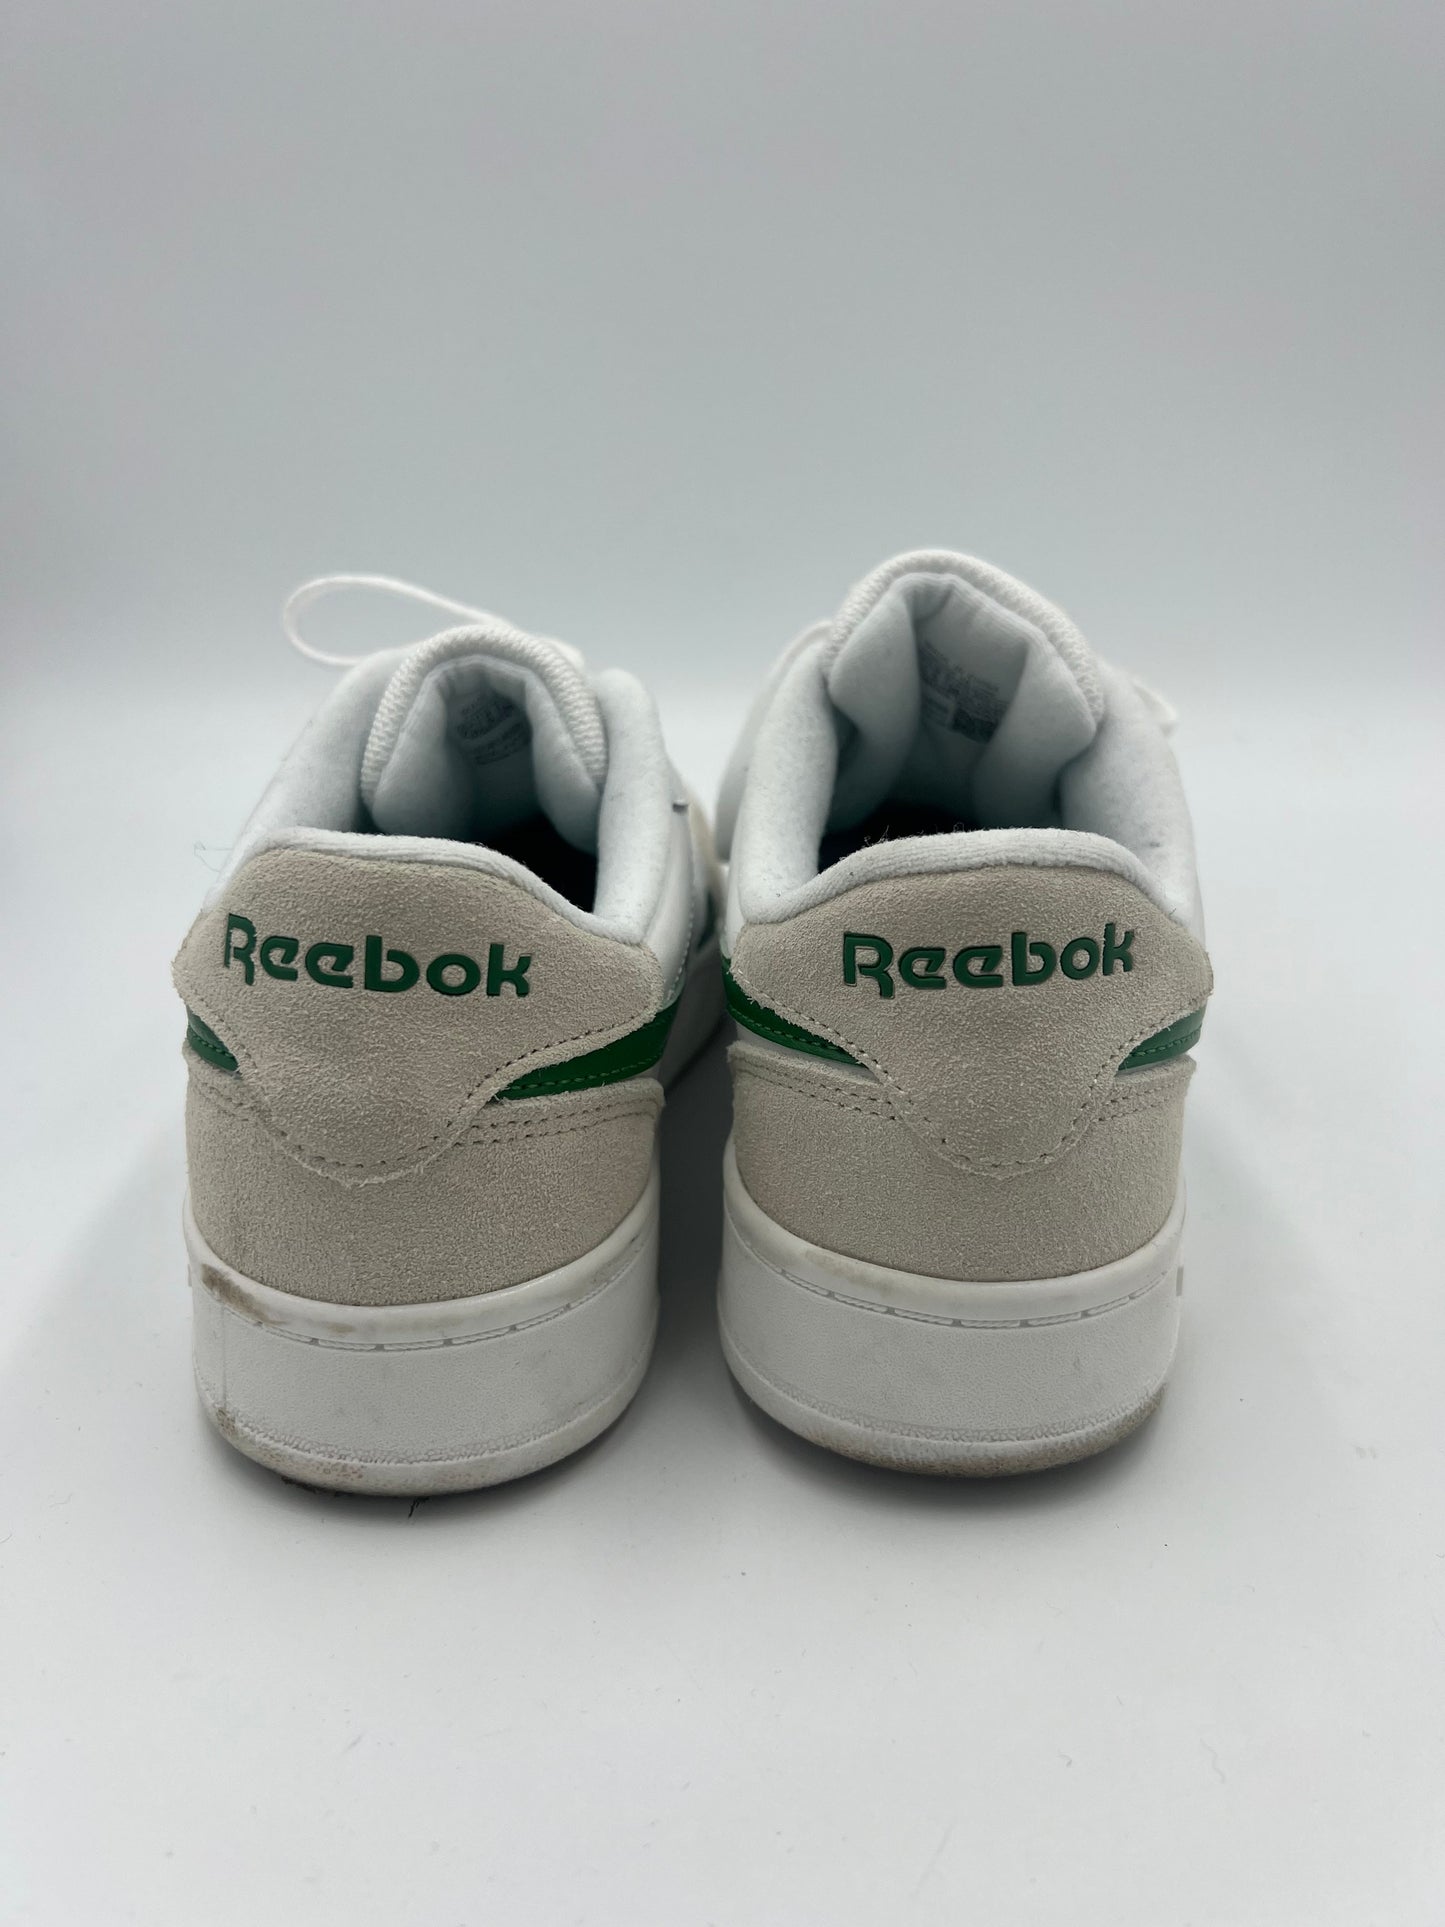 White Shoes Athletic Reebok, Size 7.5